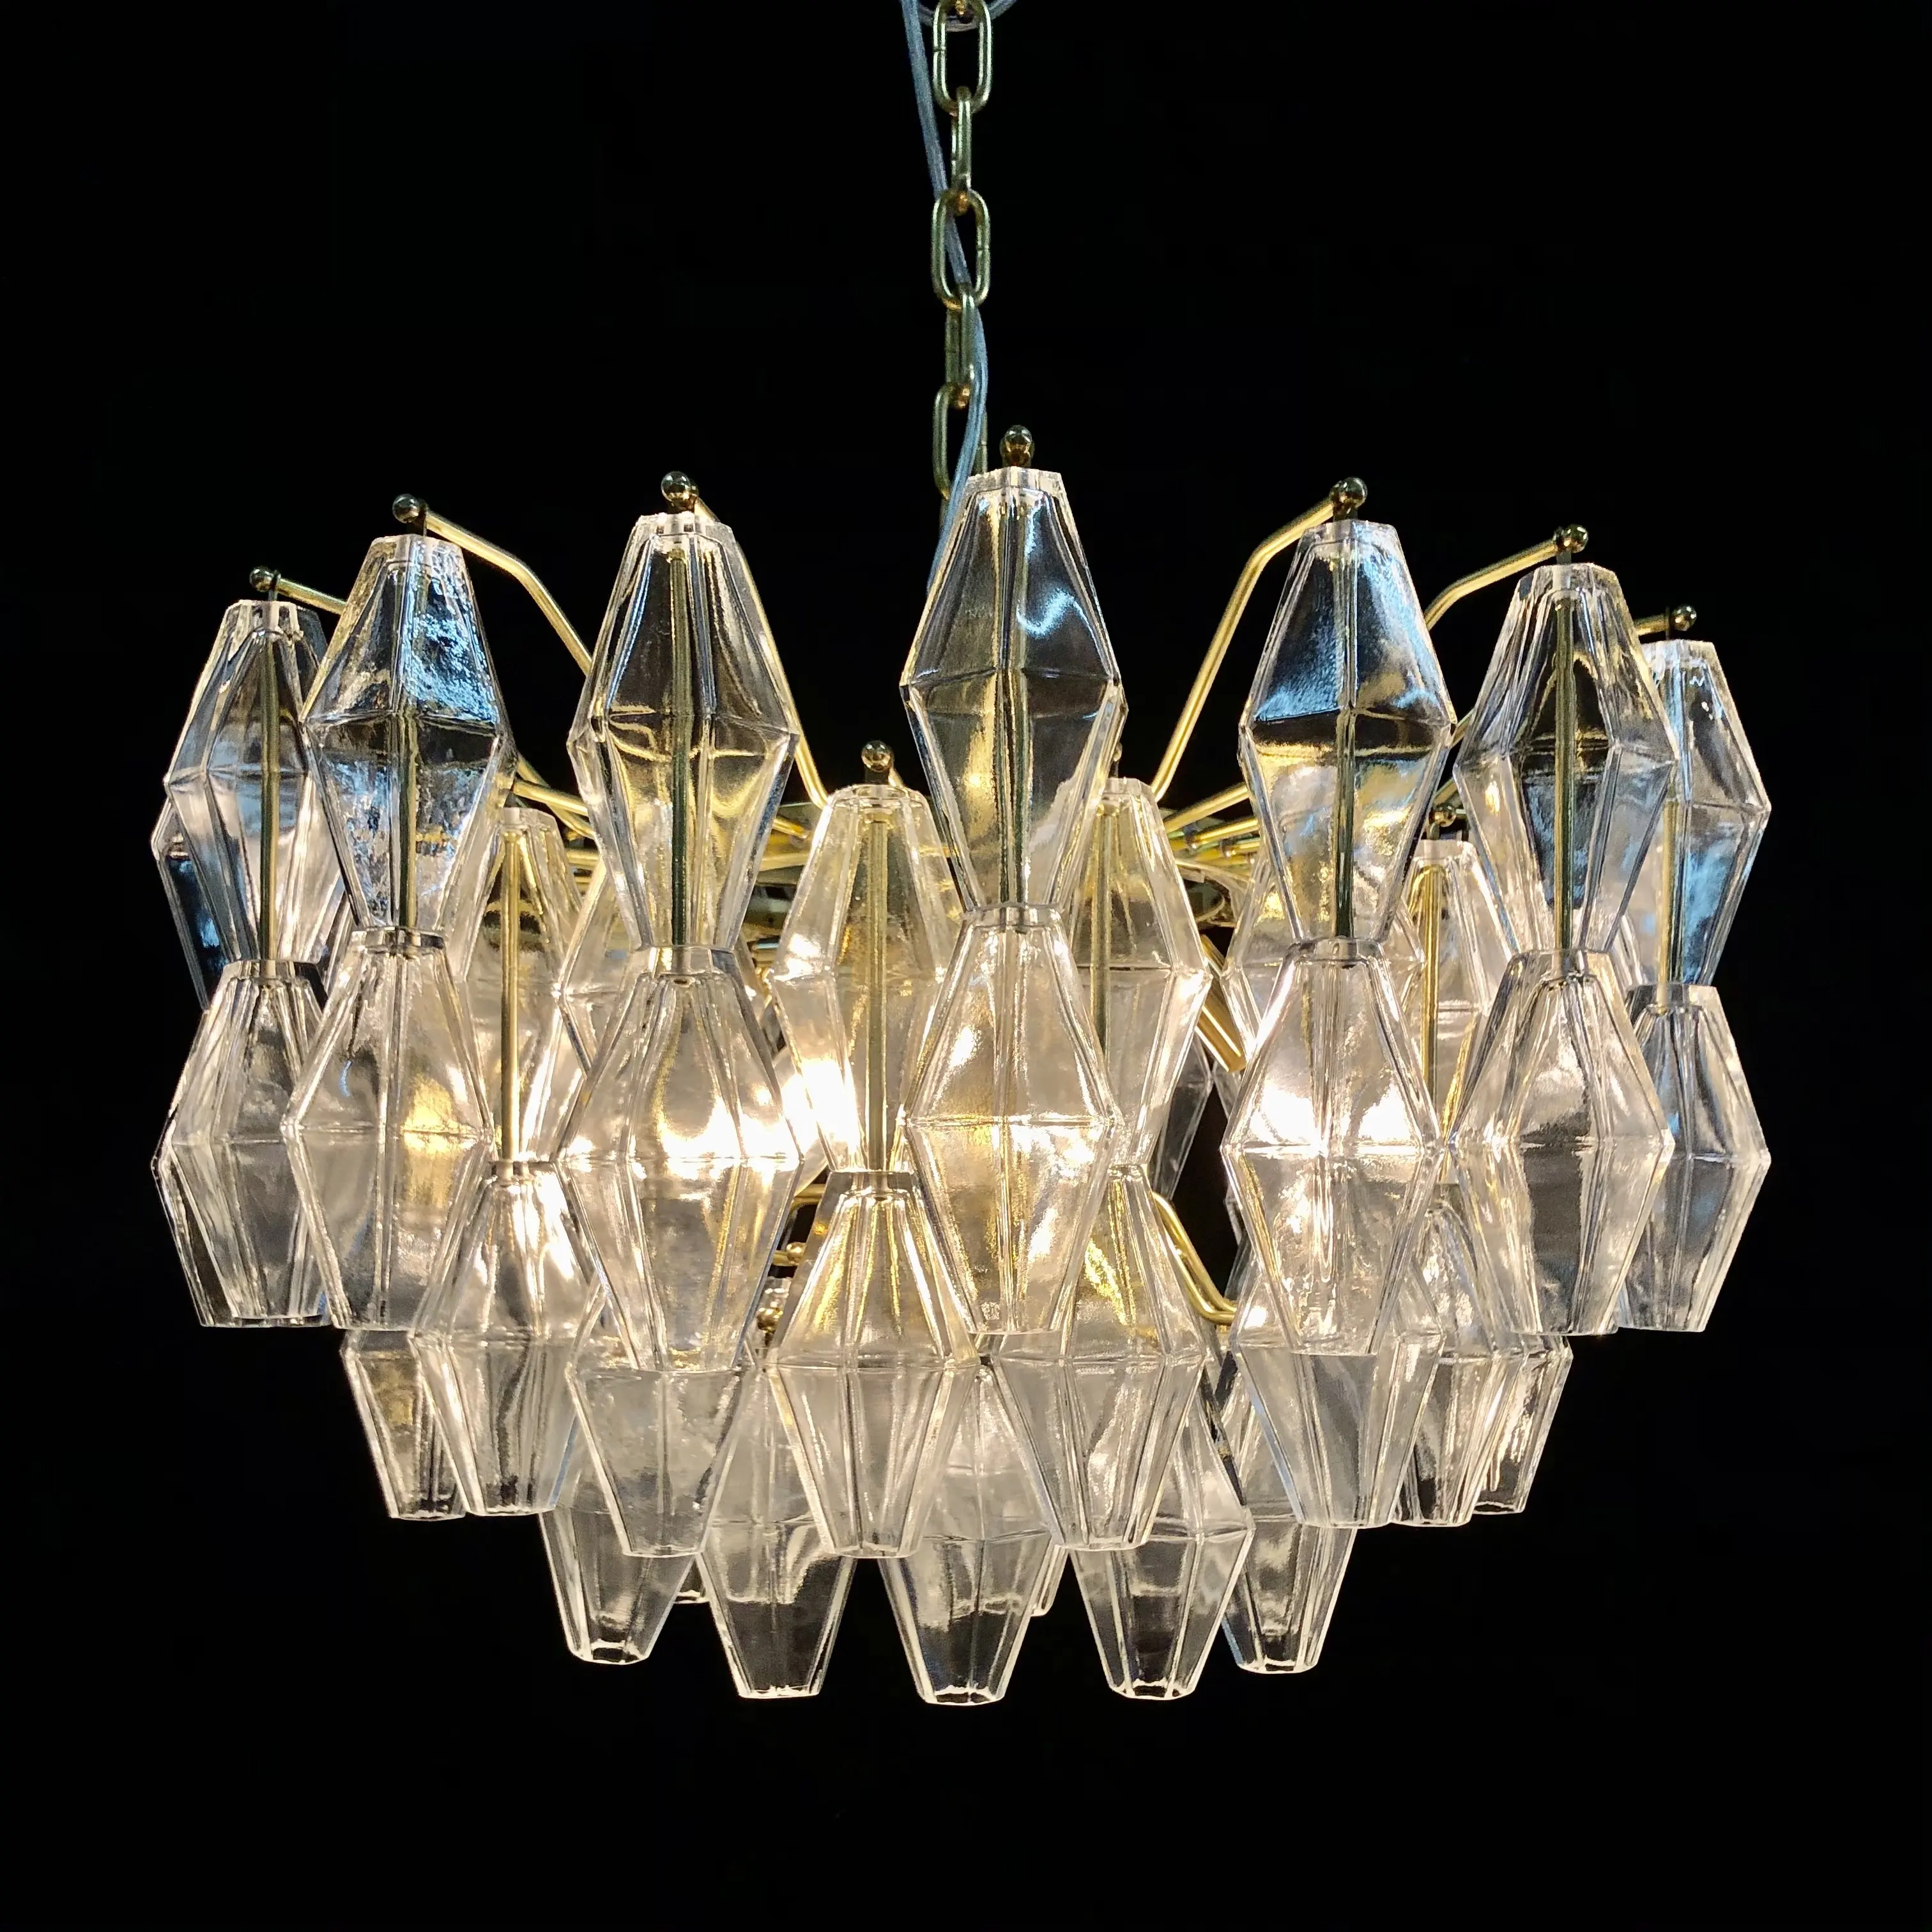 Handmade Vintage Venini Collection Poliedri Murano Clear Glass Chandelier Pendants Light Gold Metal frame For Indoor Decor